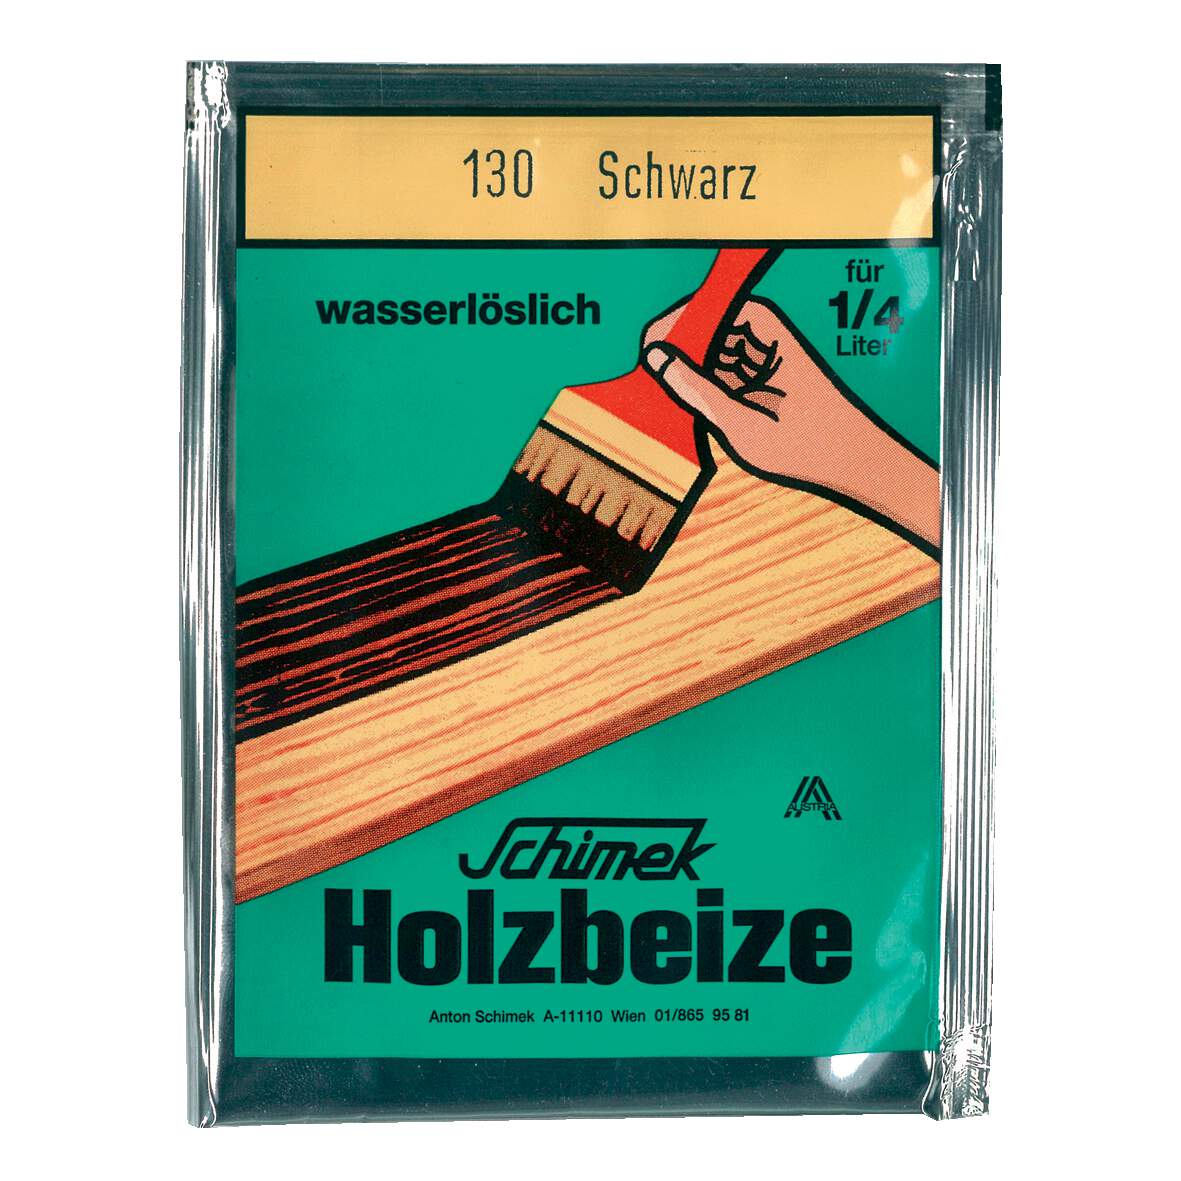 1216617 - Holzbeize Teakholz Nr.97 wasserlöslich